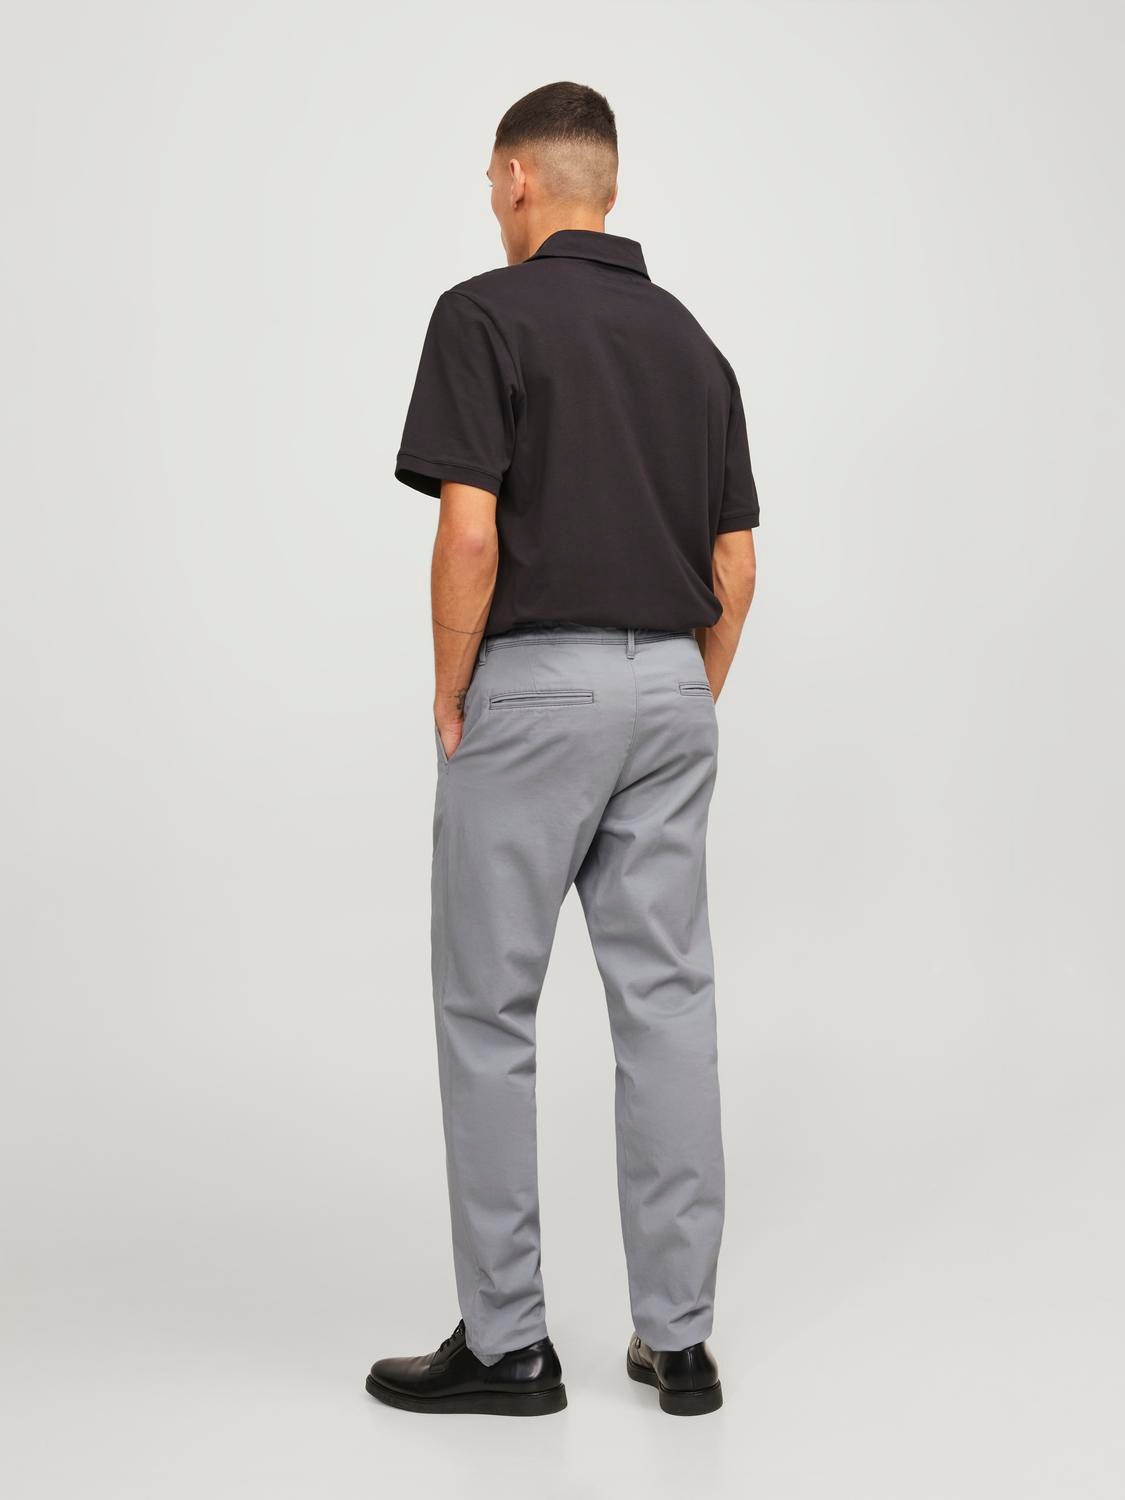 Jack & Jones Slim Fit Chino trousers -Ultimate Grey - 12150148